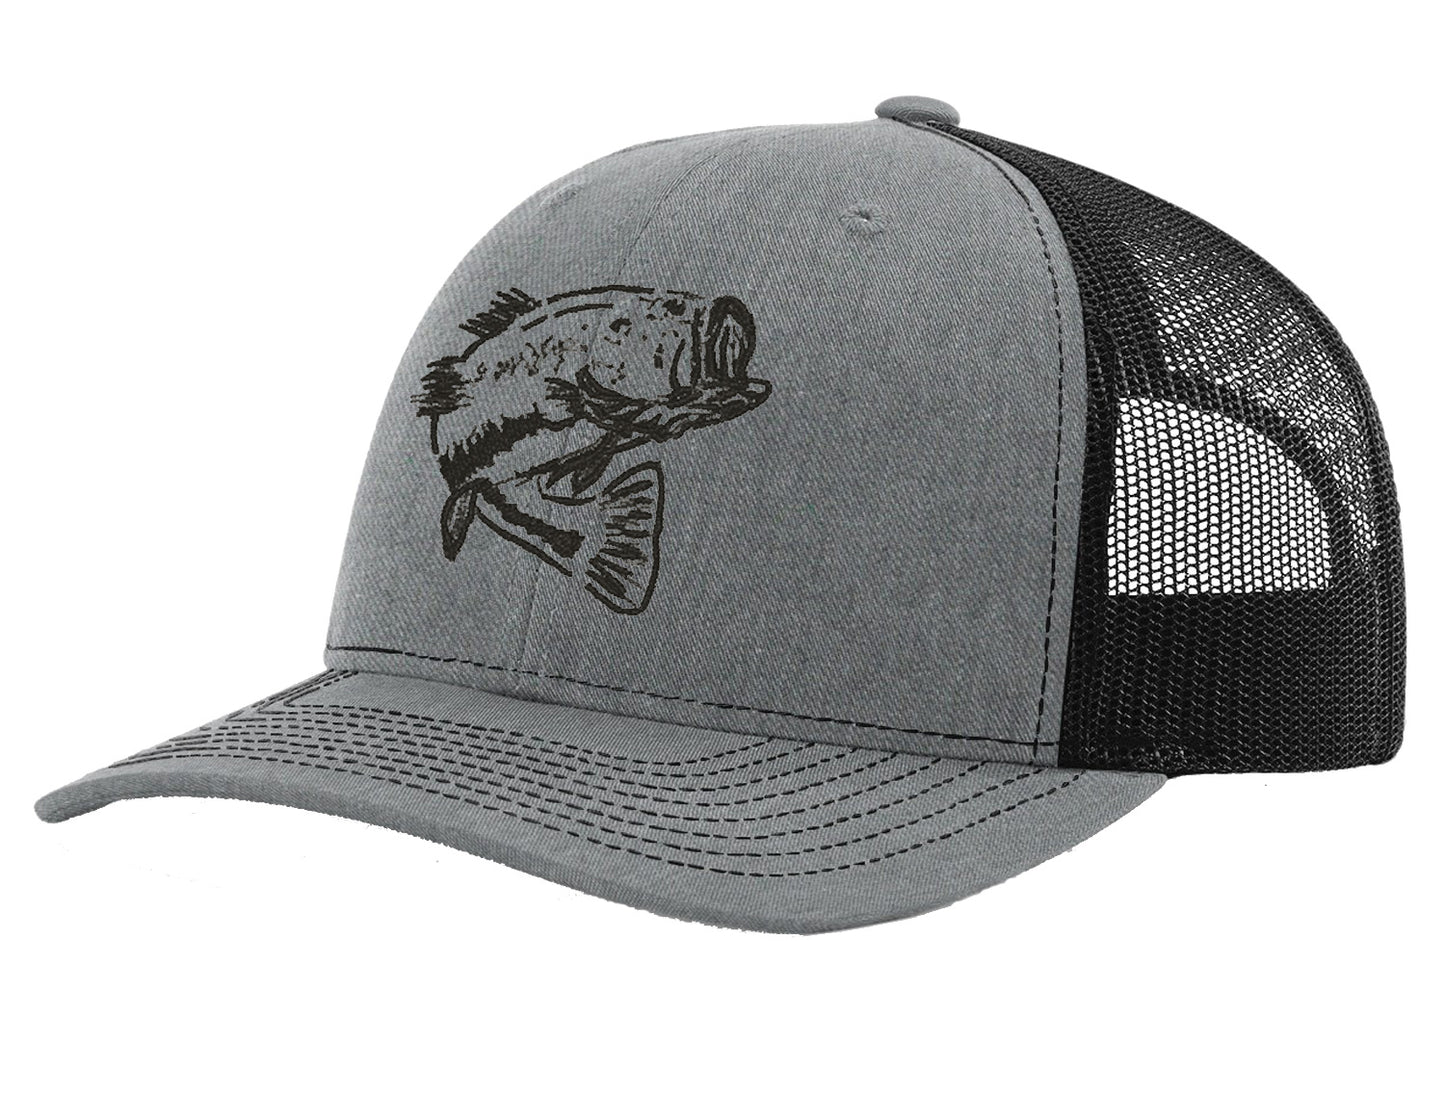 New Bass "Reel Hawg" Structured Trucker Hat - Hthr Gray/Black Mesh - Black Bass logo